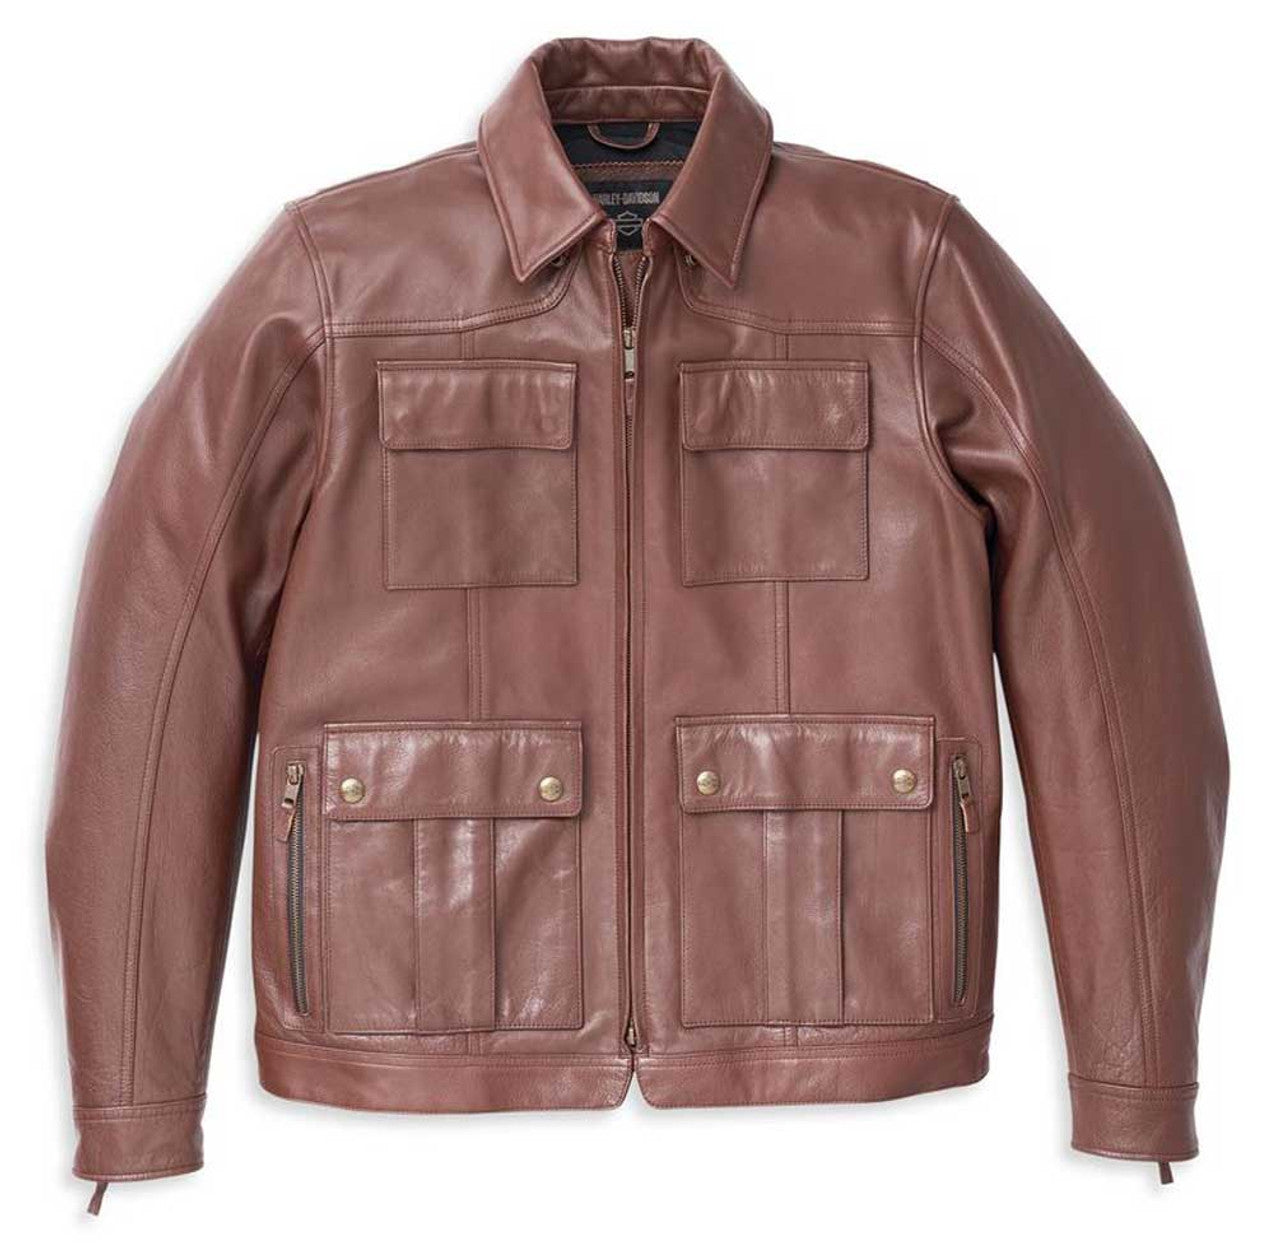 Harley-Davidson Men’s Portage Midweight Leather Jacket – Brown